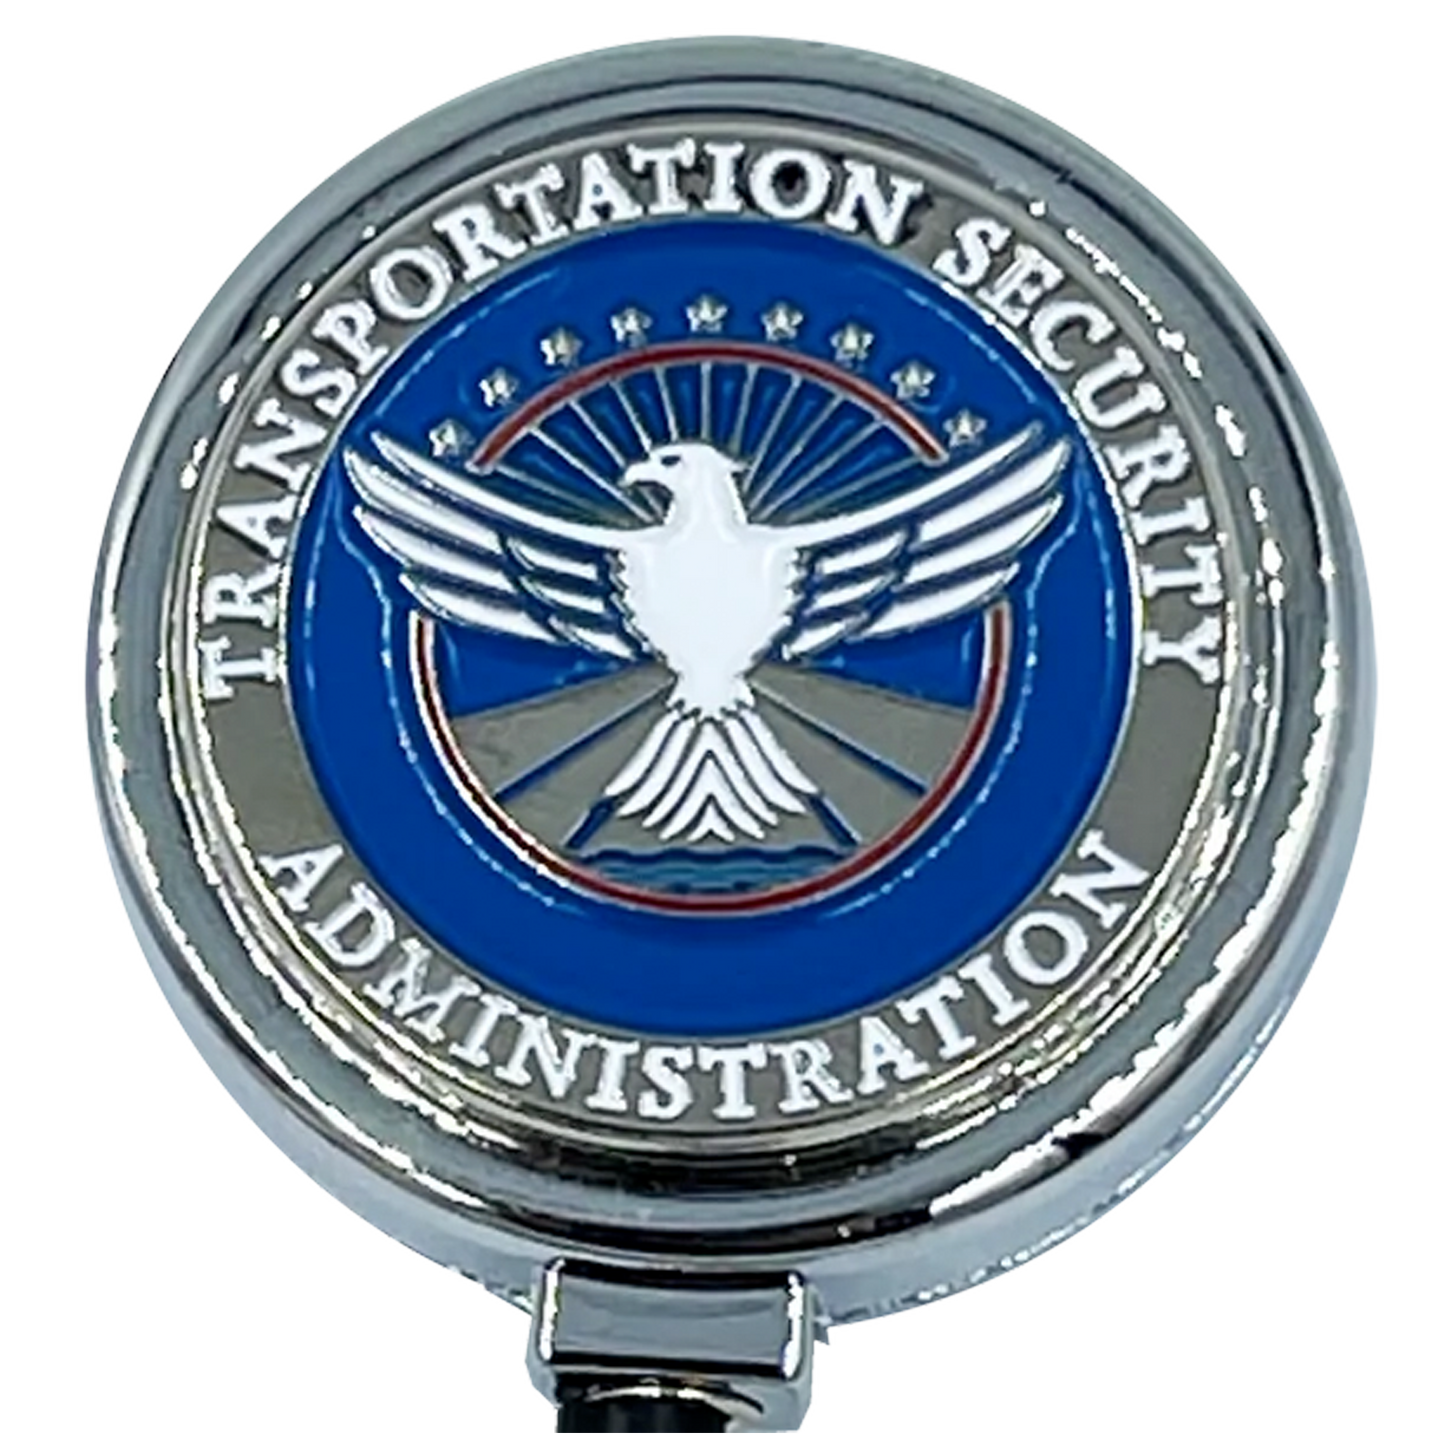 BL10-019 TSA Officer Metal ID Reel retractable ID Card Holder Transportation Security Administration Airport Screener